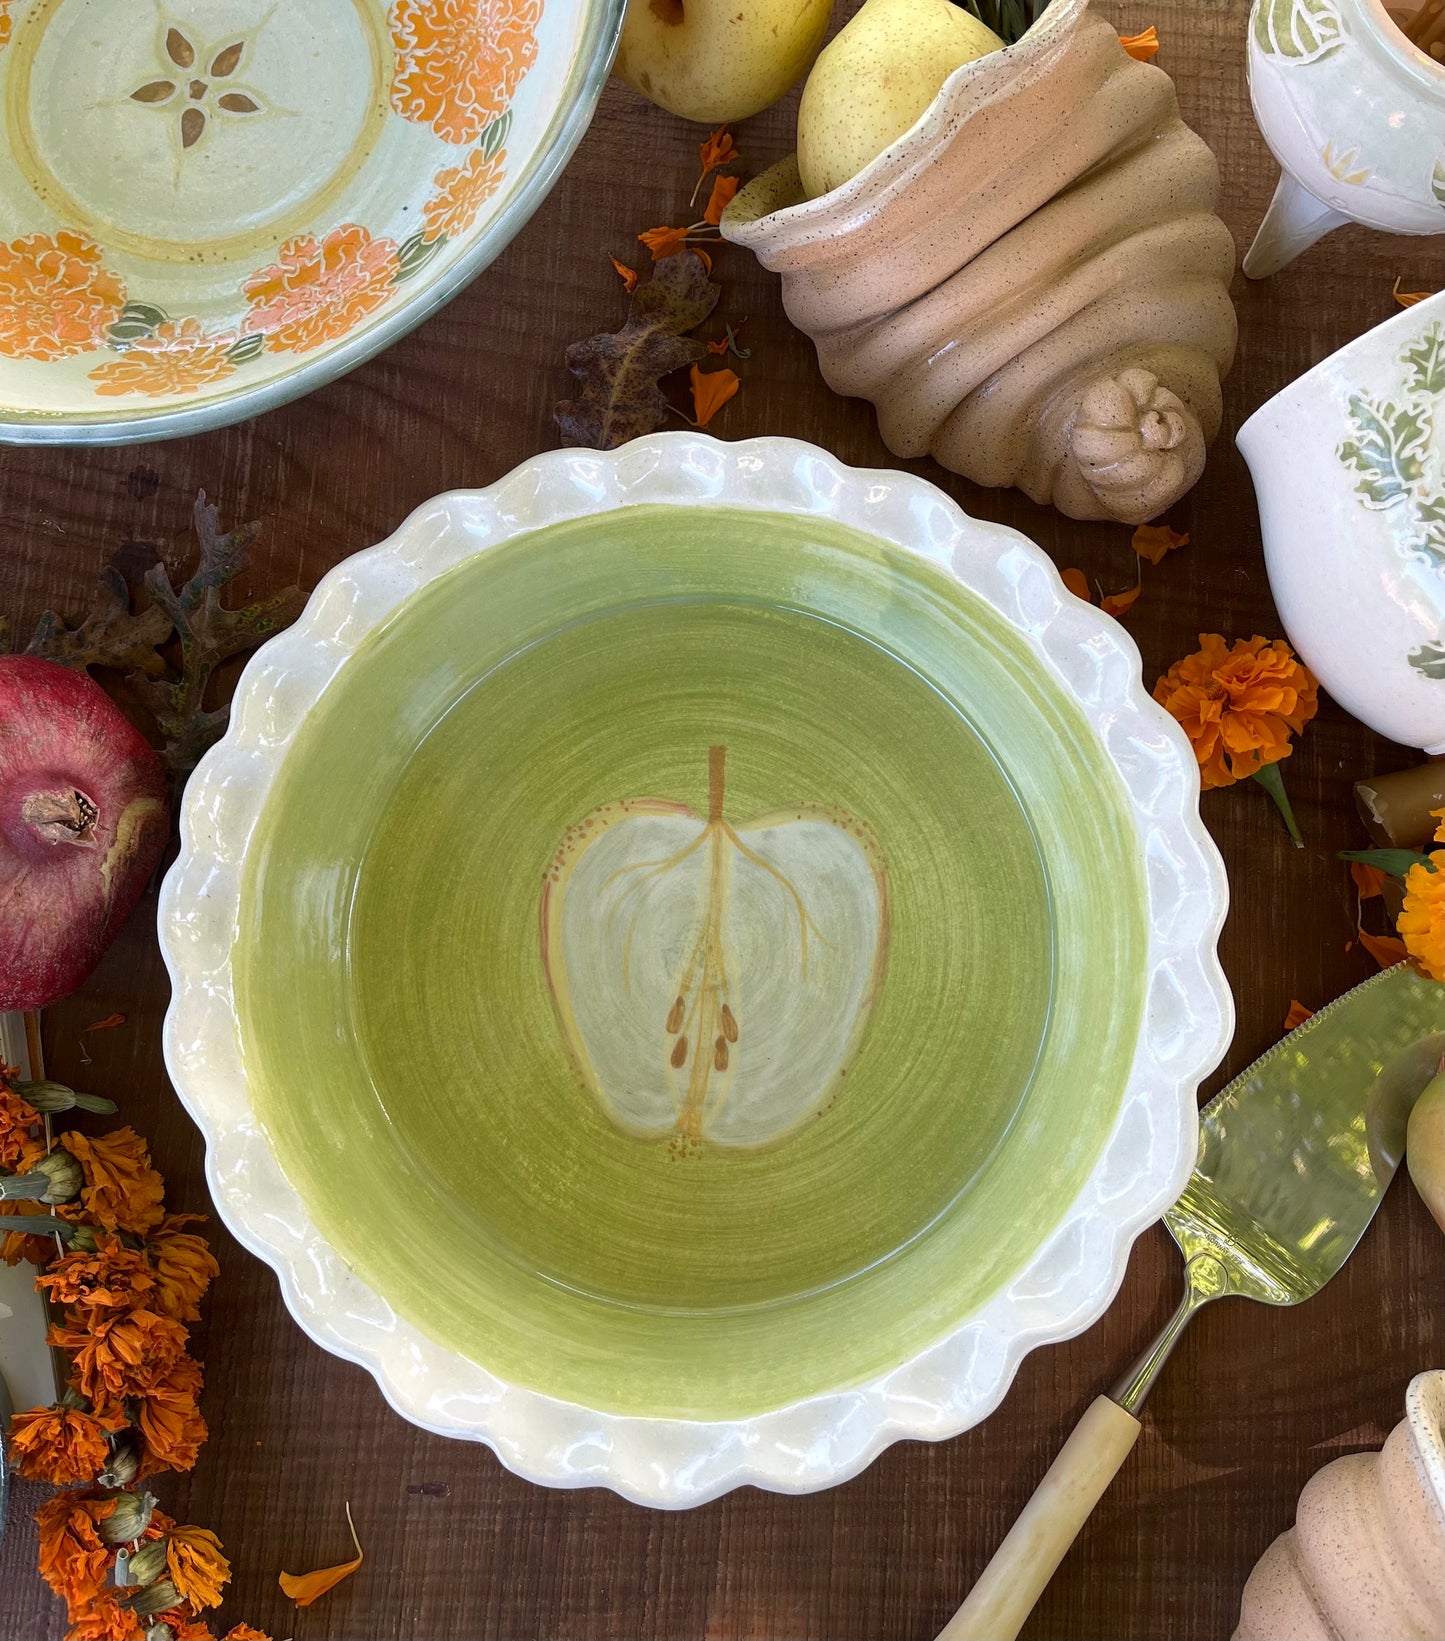 Green Apple Ceramic Pie Pan - Baking Dish - Deep Dish Pie - Pie Dish - Pie Plate